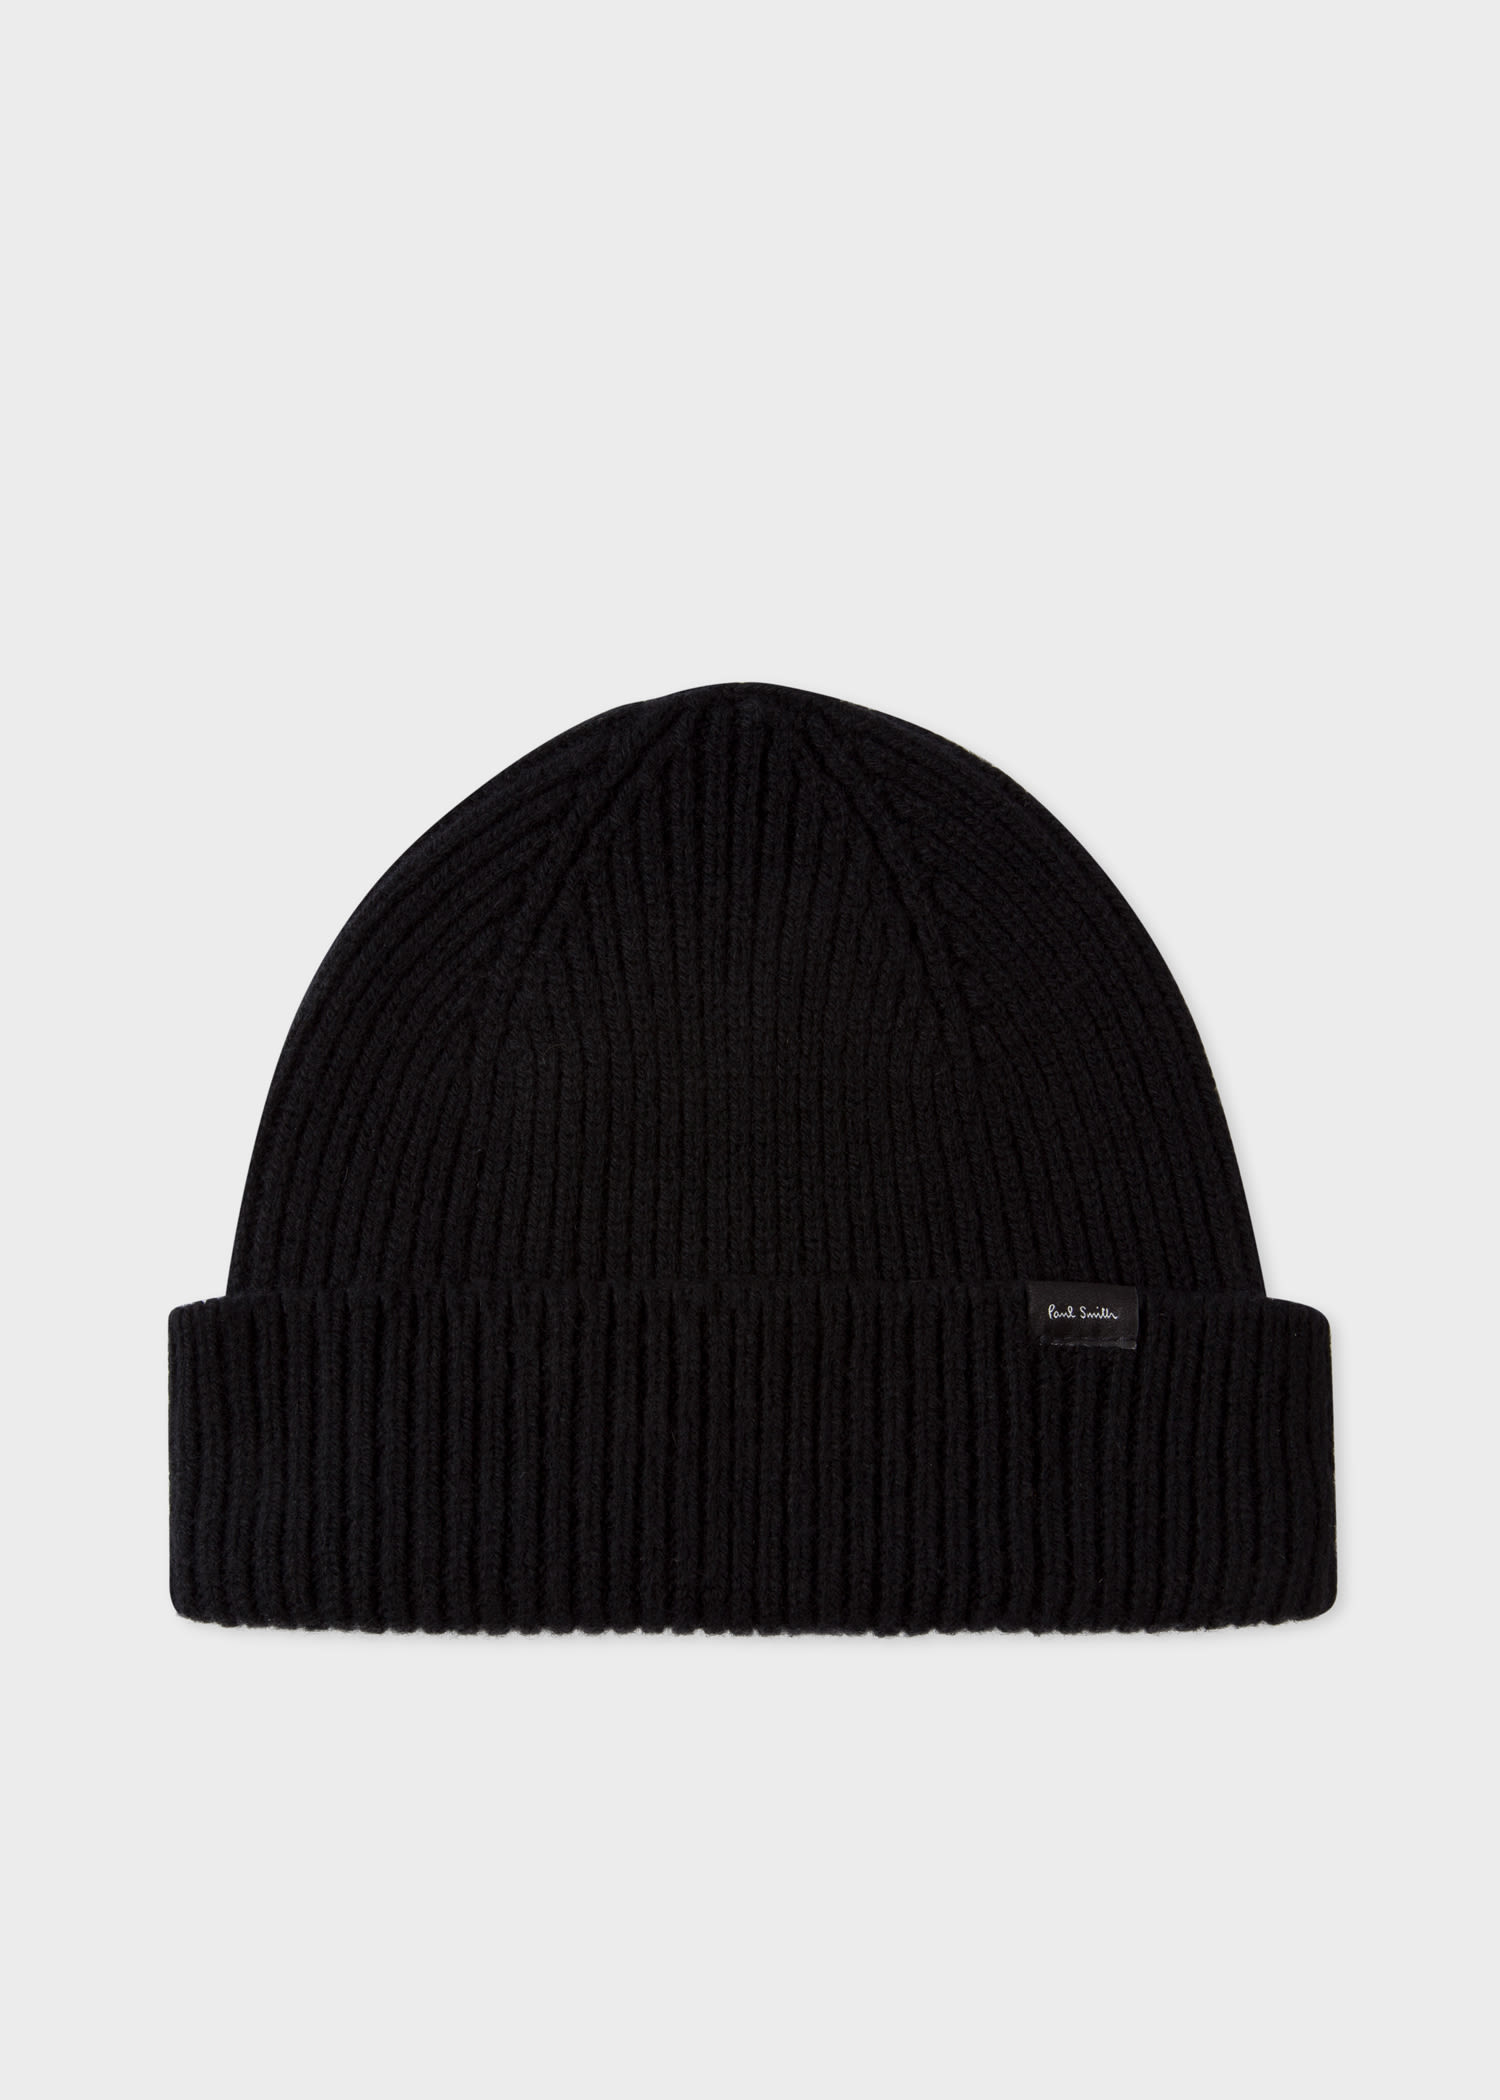 Paul Smith Black Cashmere-blend Beanie Hat